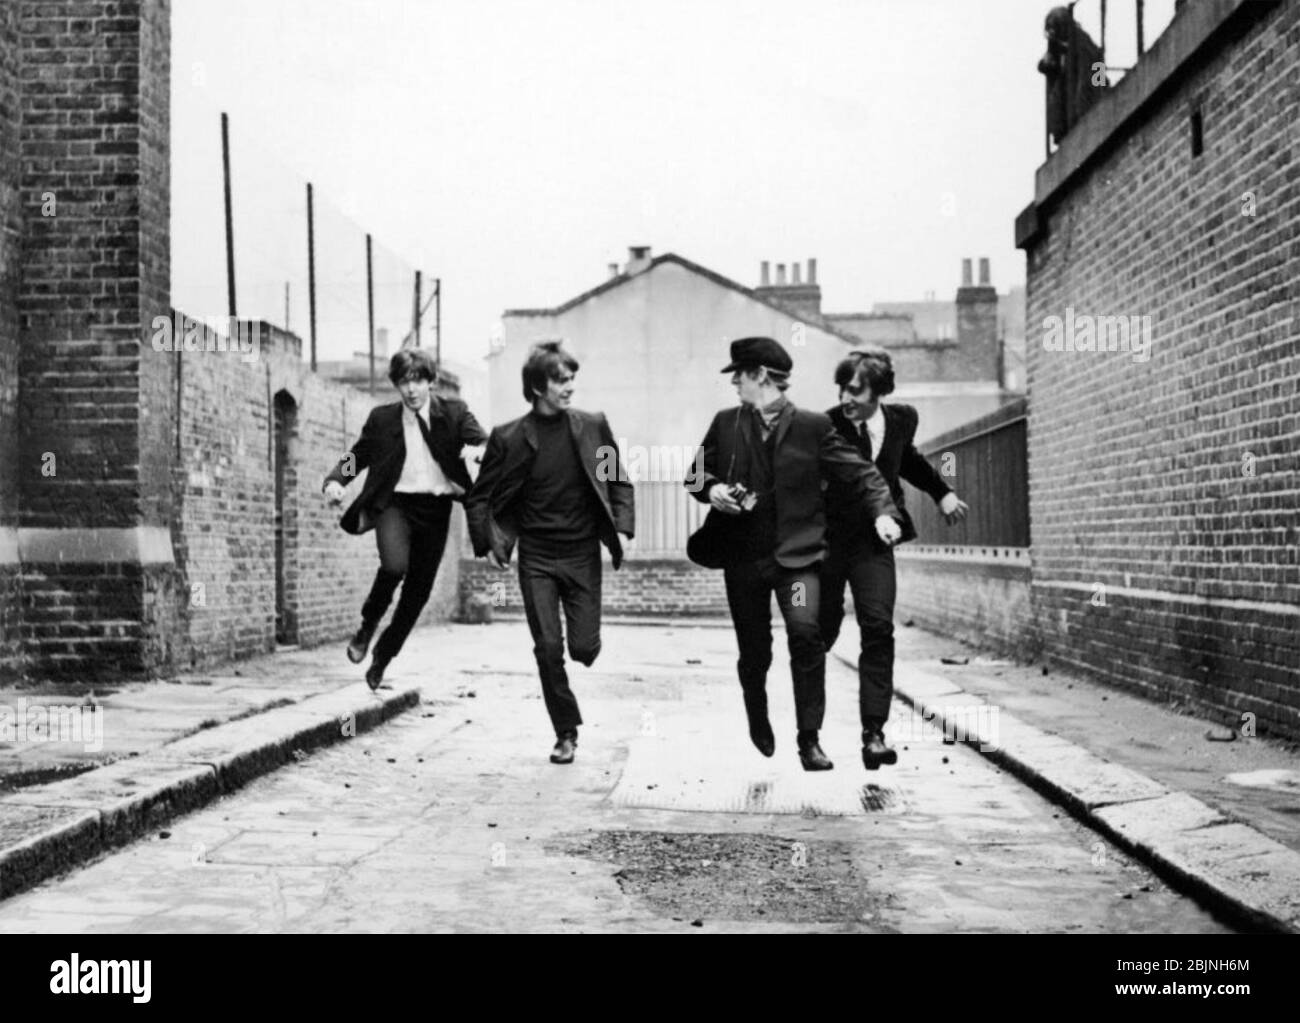 A HARD DAY'S NIGHT 1964 United Artists Film mit von links: Paul McCartney, George Harrison, John Lennon, Ringo Starr Stockfoto